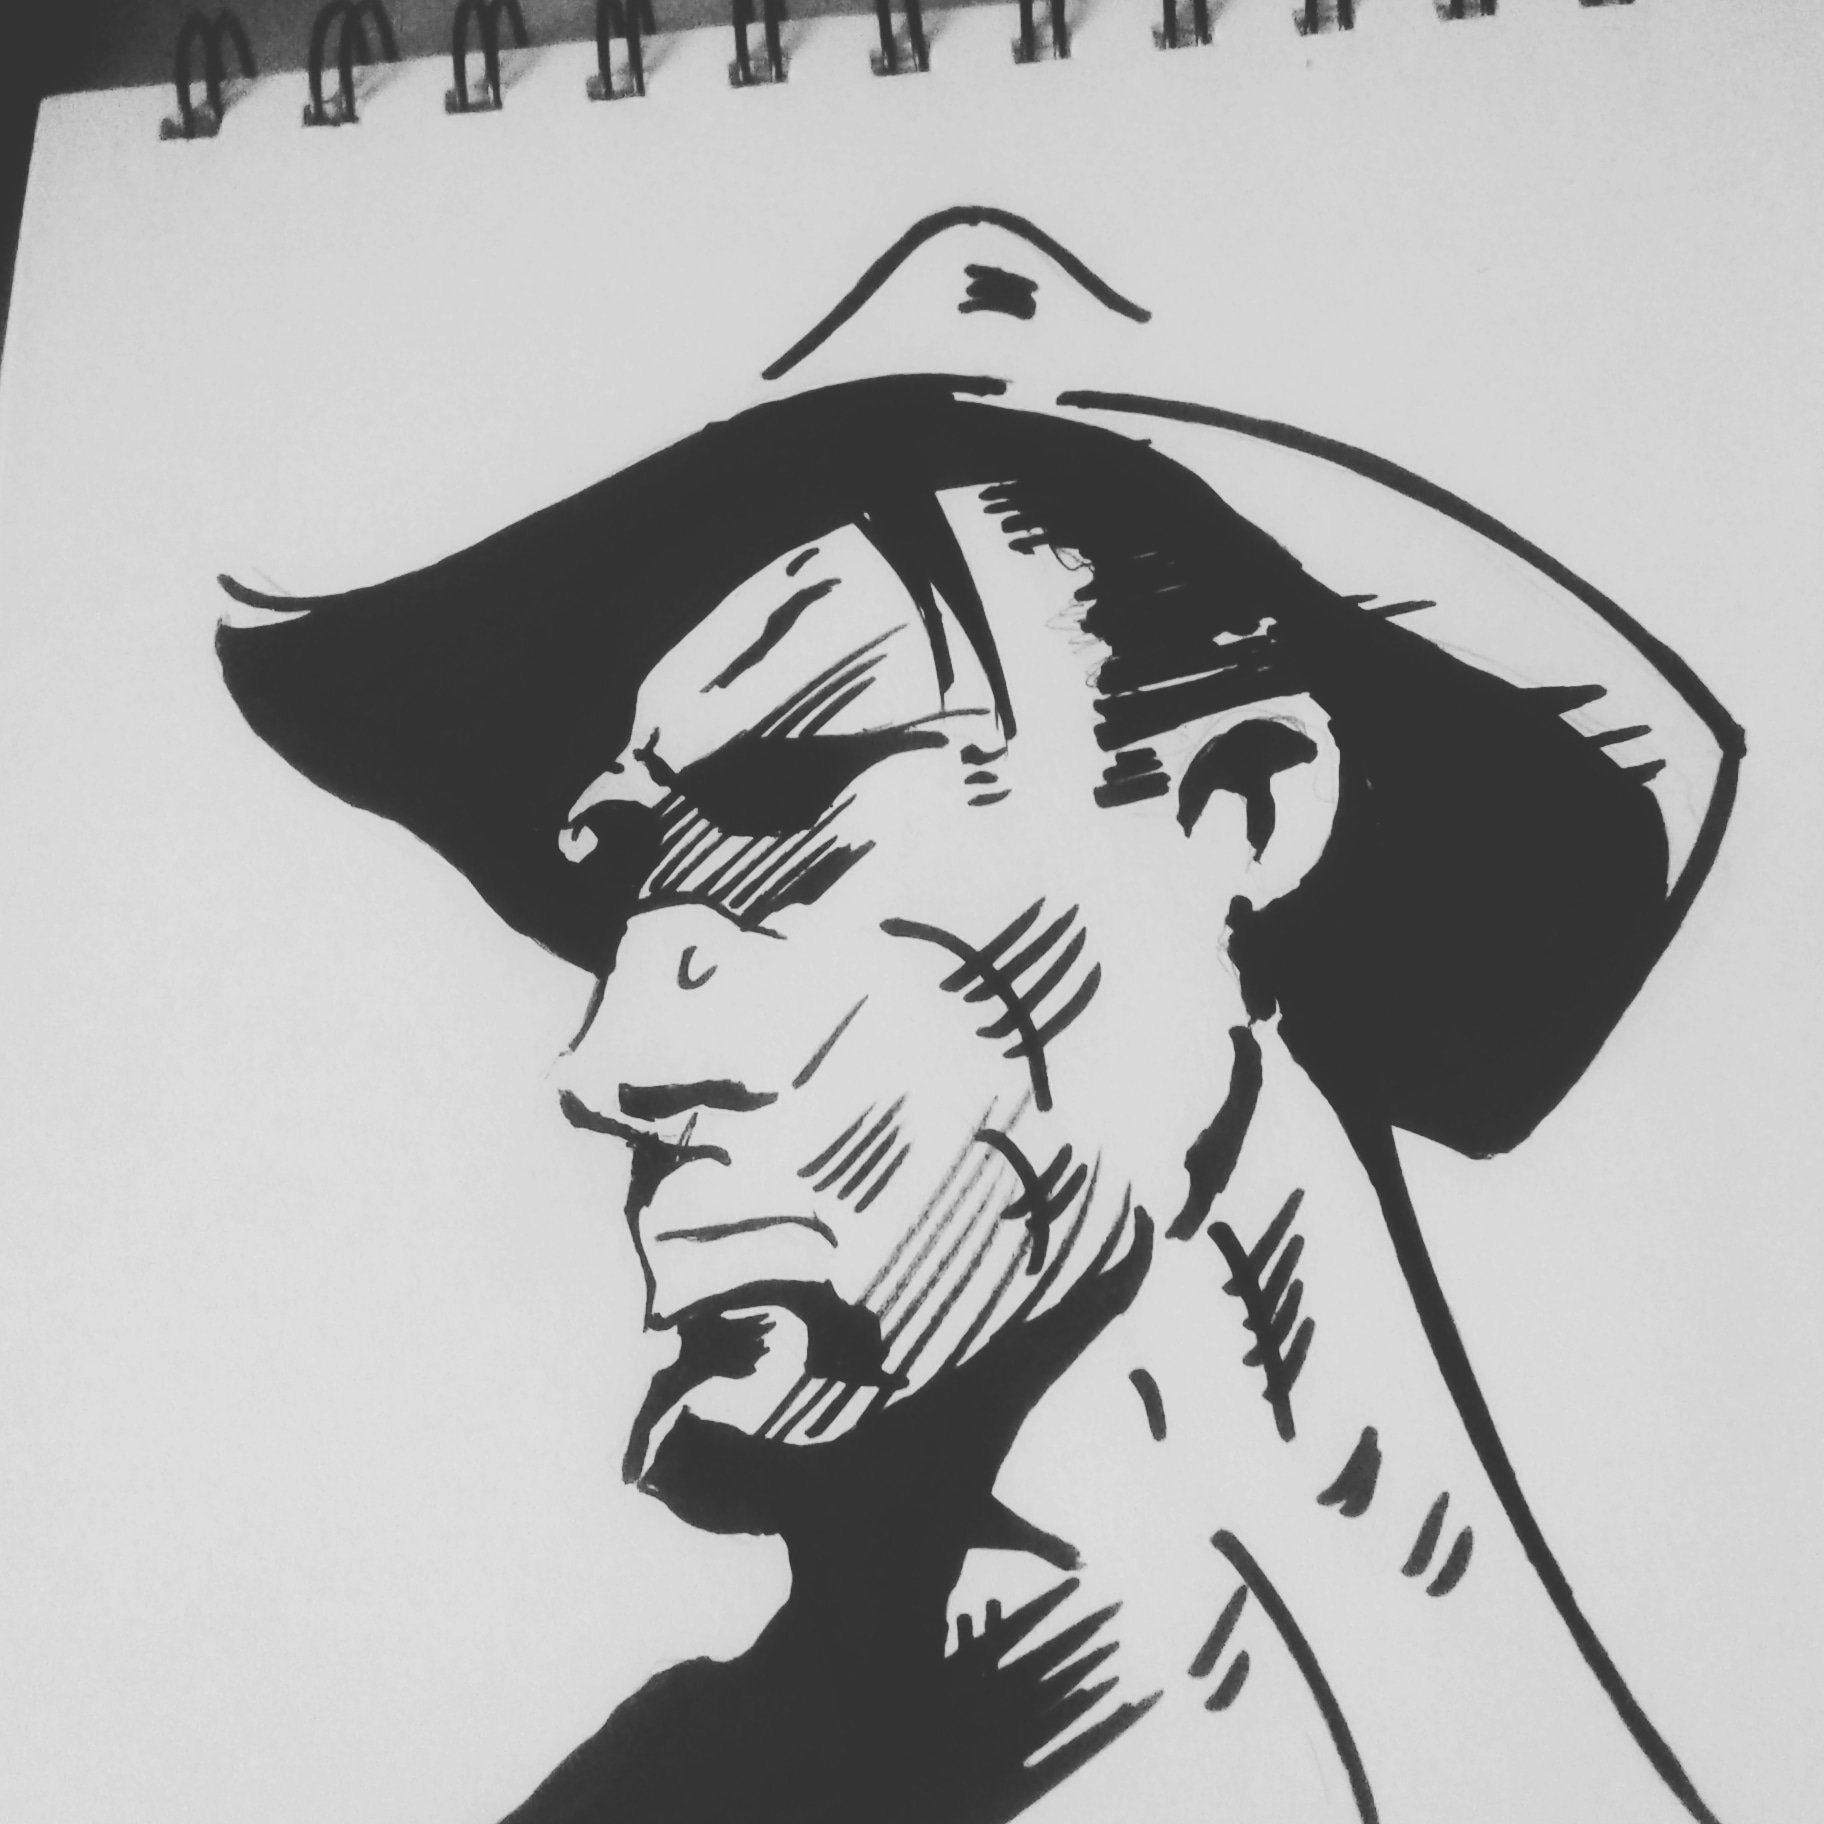 Cowboy Walking, Chaps, Rodeo, Working Cowboy, Pencil Drawing, Realism Art